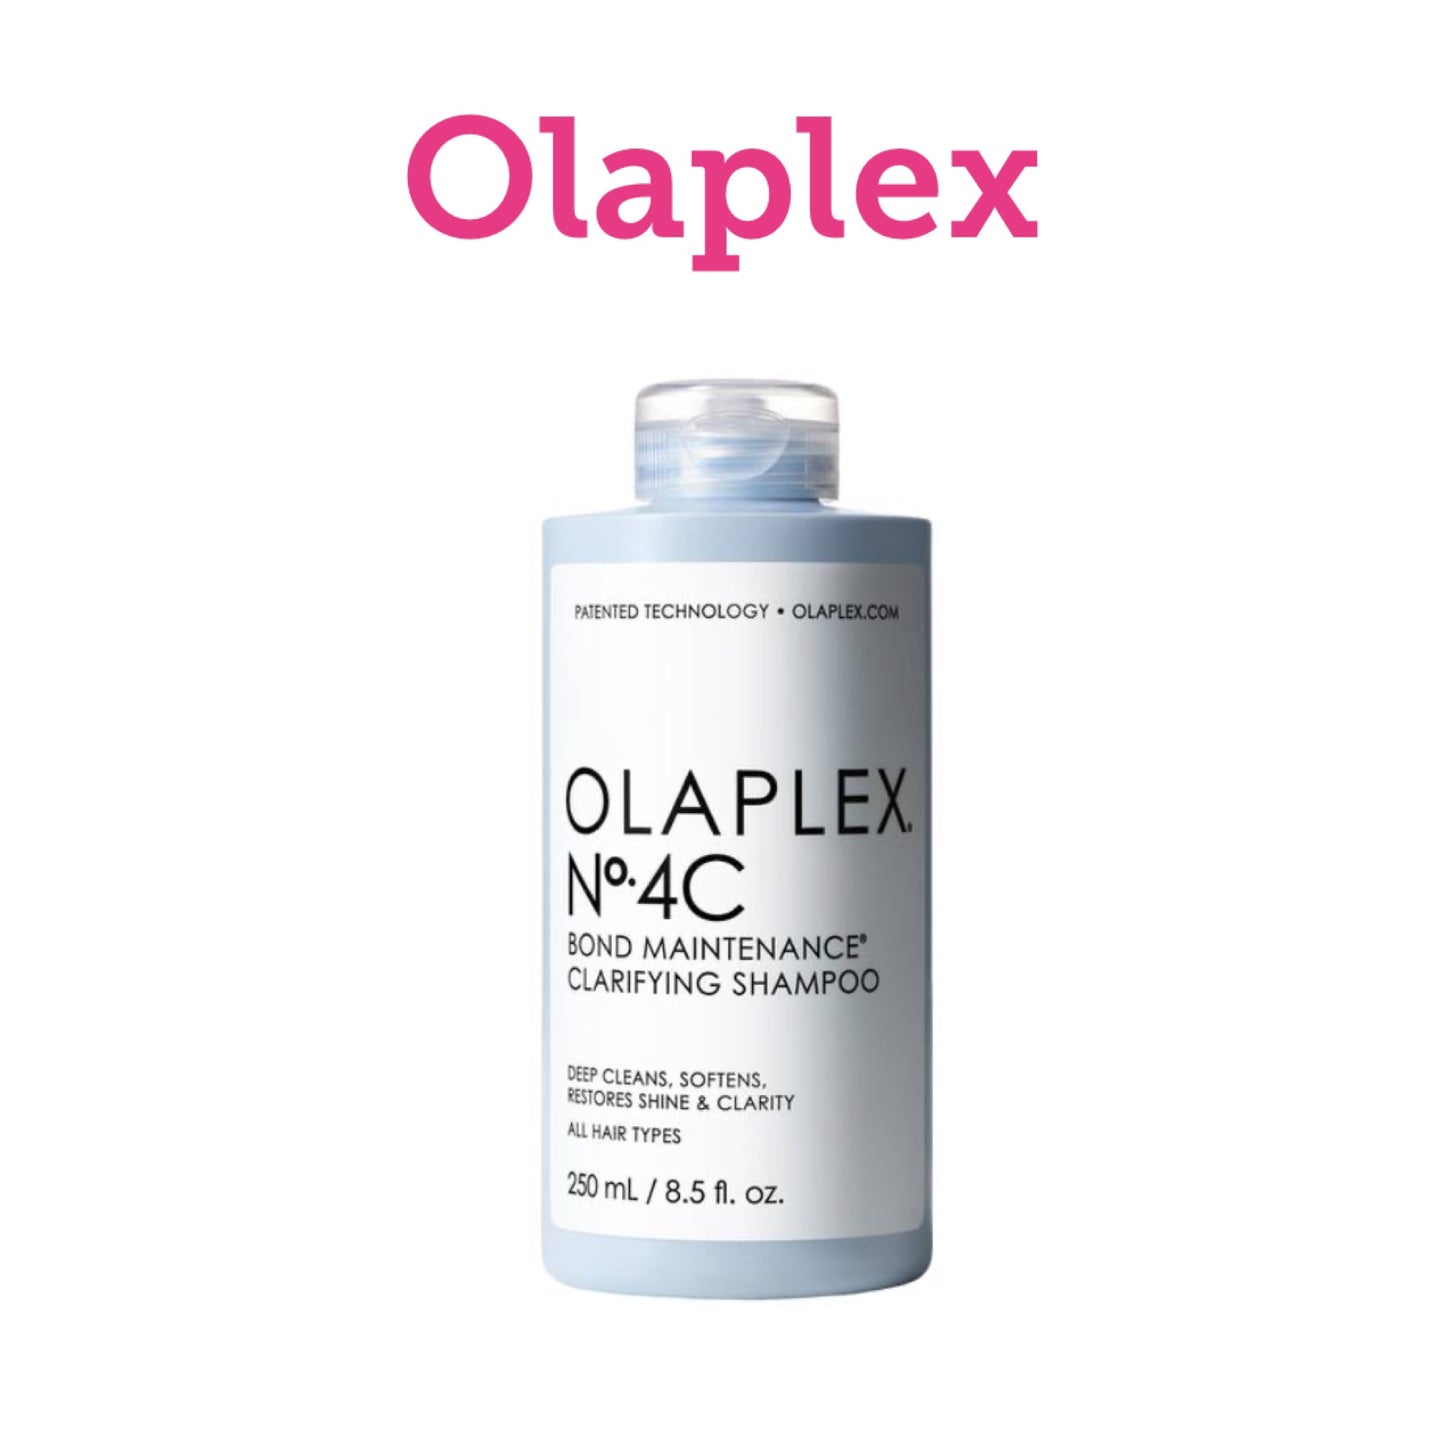 Olaplex No.4C Bond Maintenance Clarifyy Shampoo 250ml